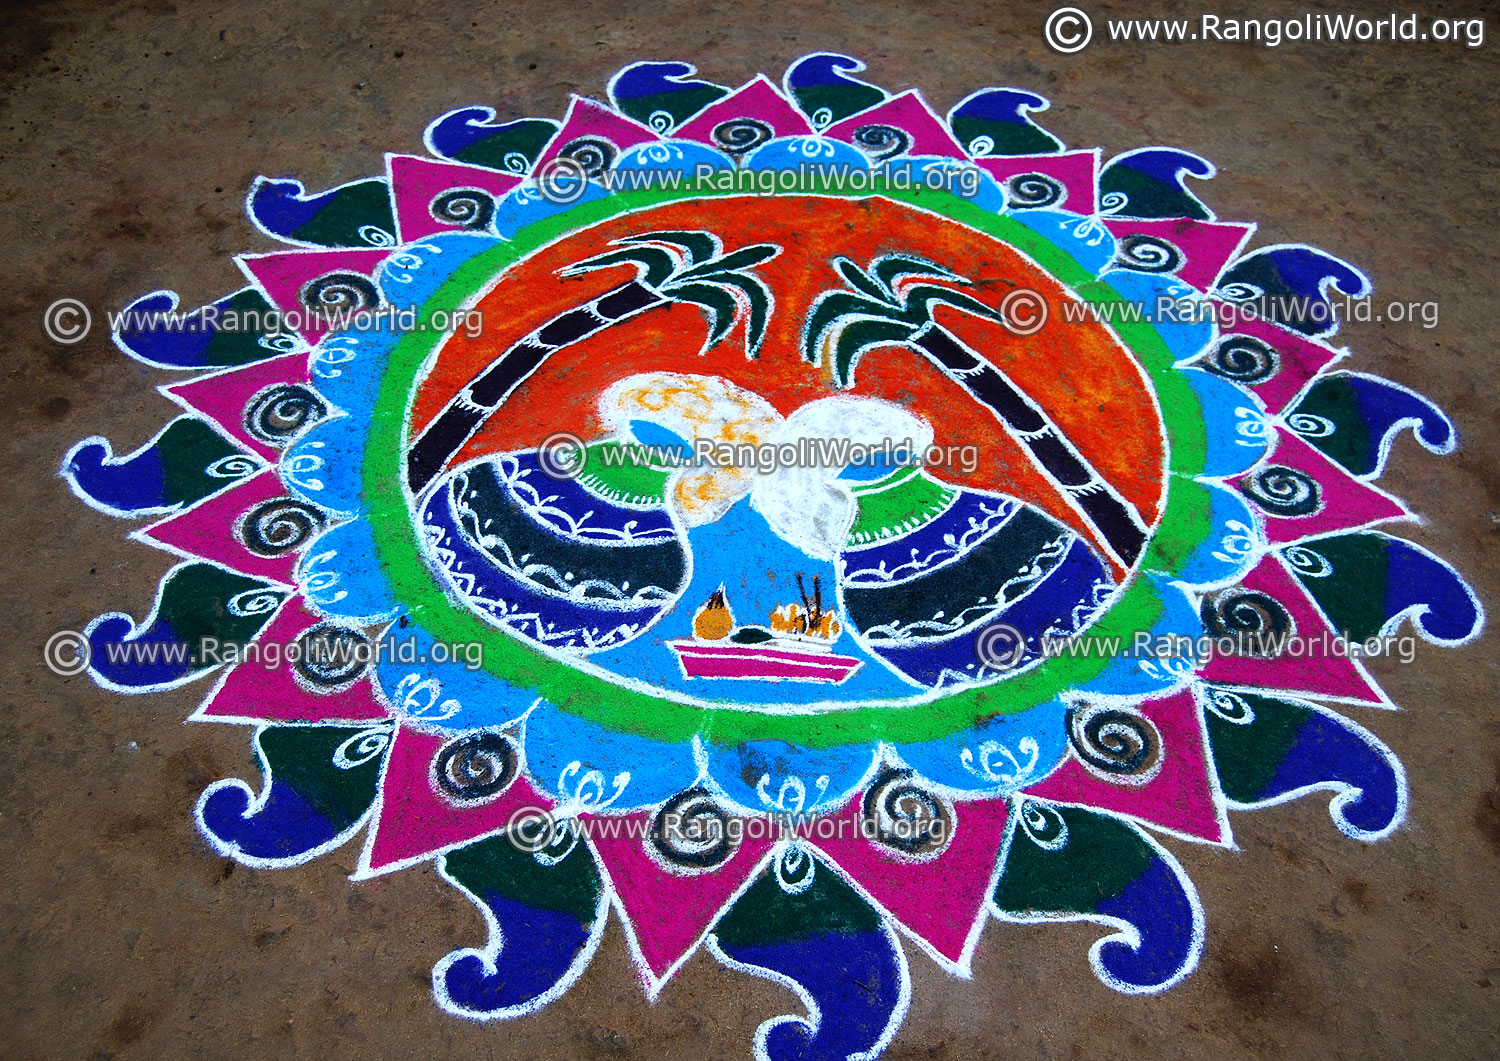 Pongal rangoli | Rangoli designs images, Rangoli designs, Outdoor ...